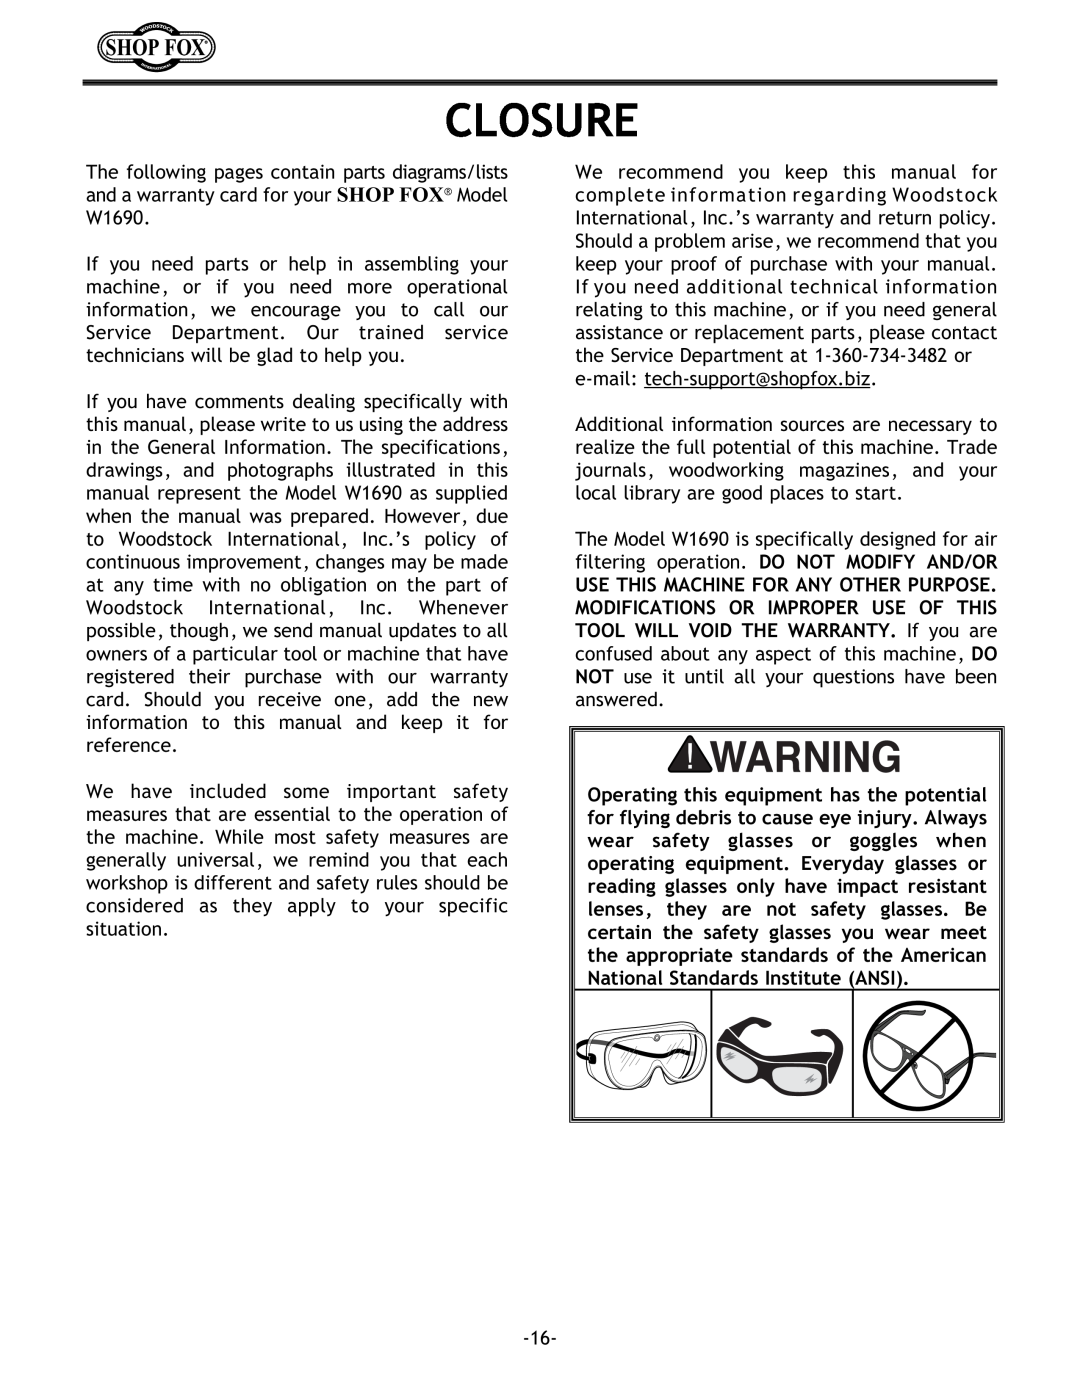 Woodstock W1690 instruction manual Closure 